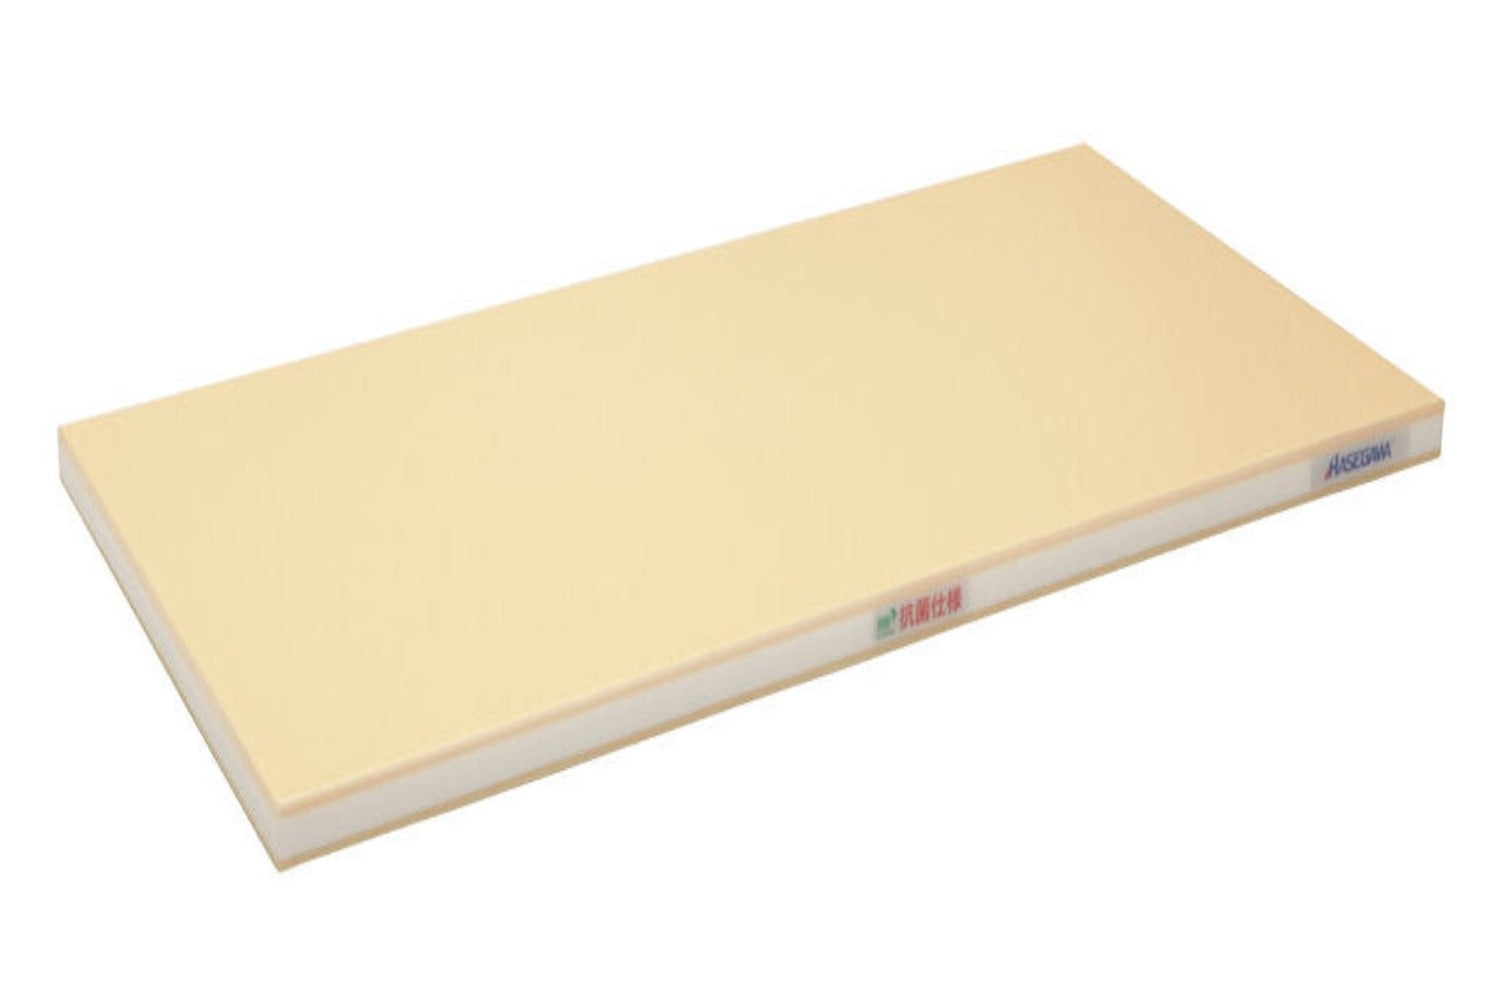 Hasegawa FSR Pro-Soft Cutting Board with Wood Core